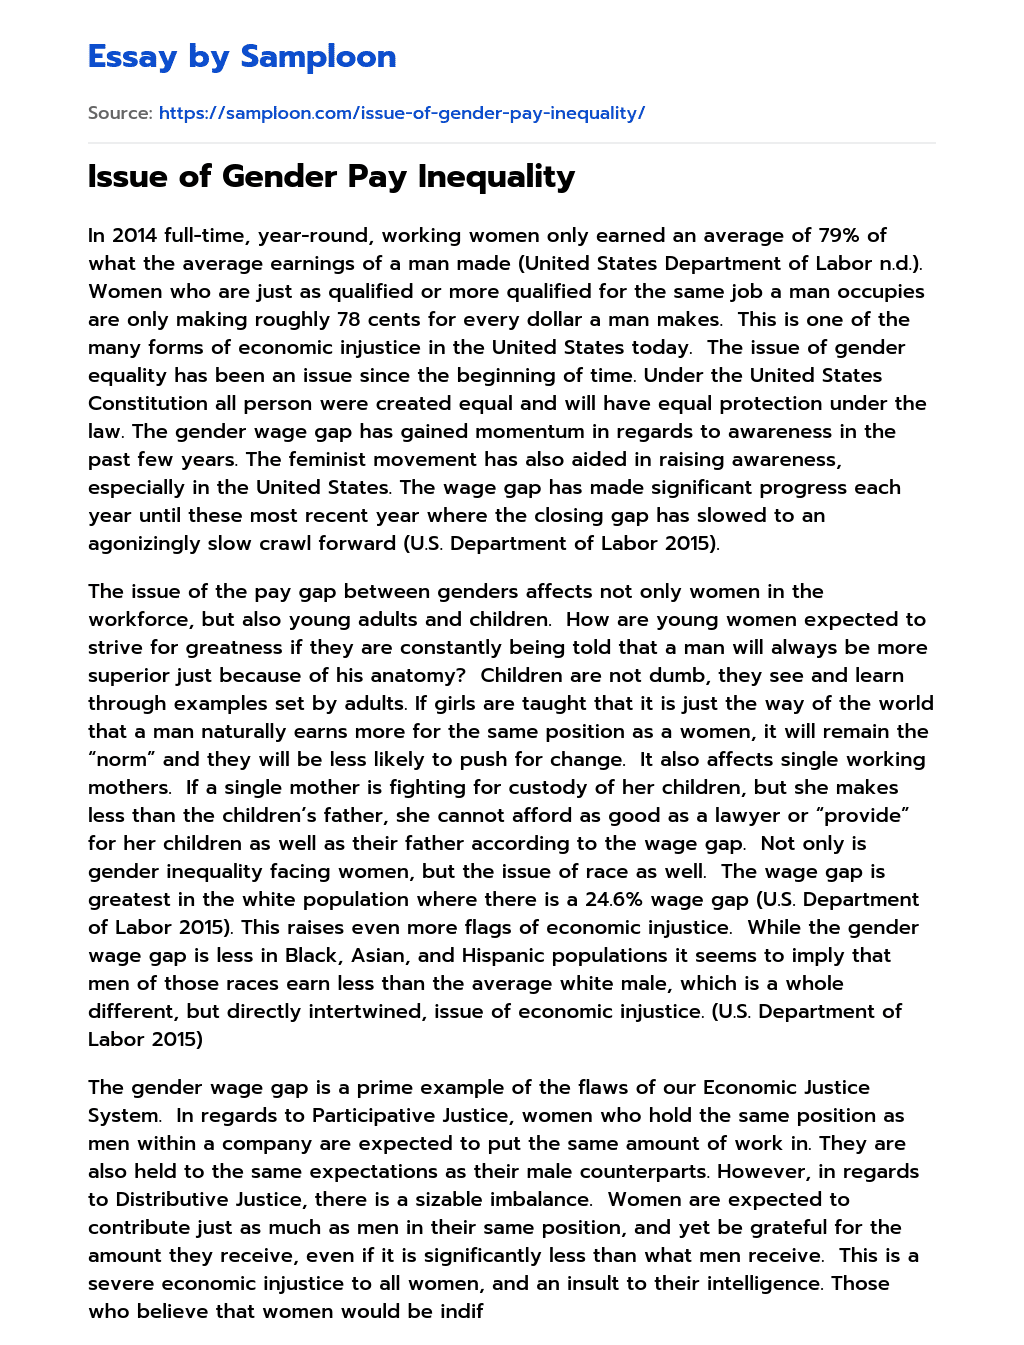 gender inequality essay example